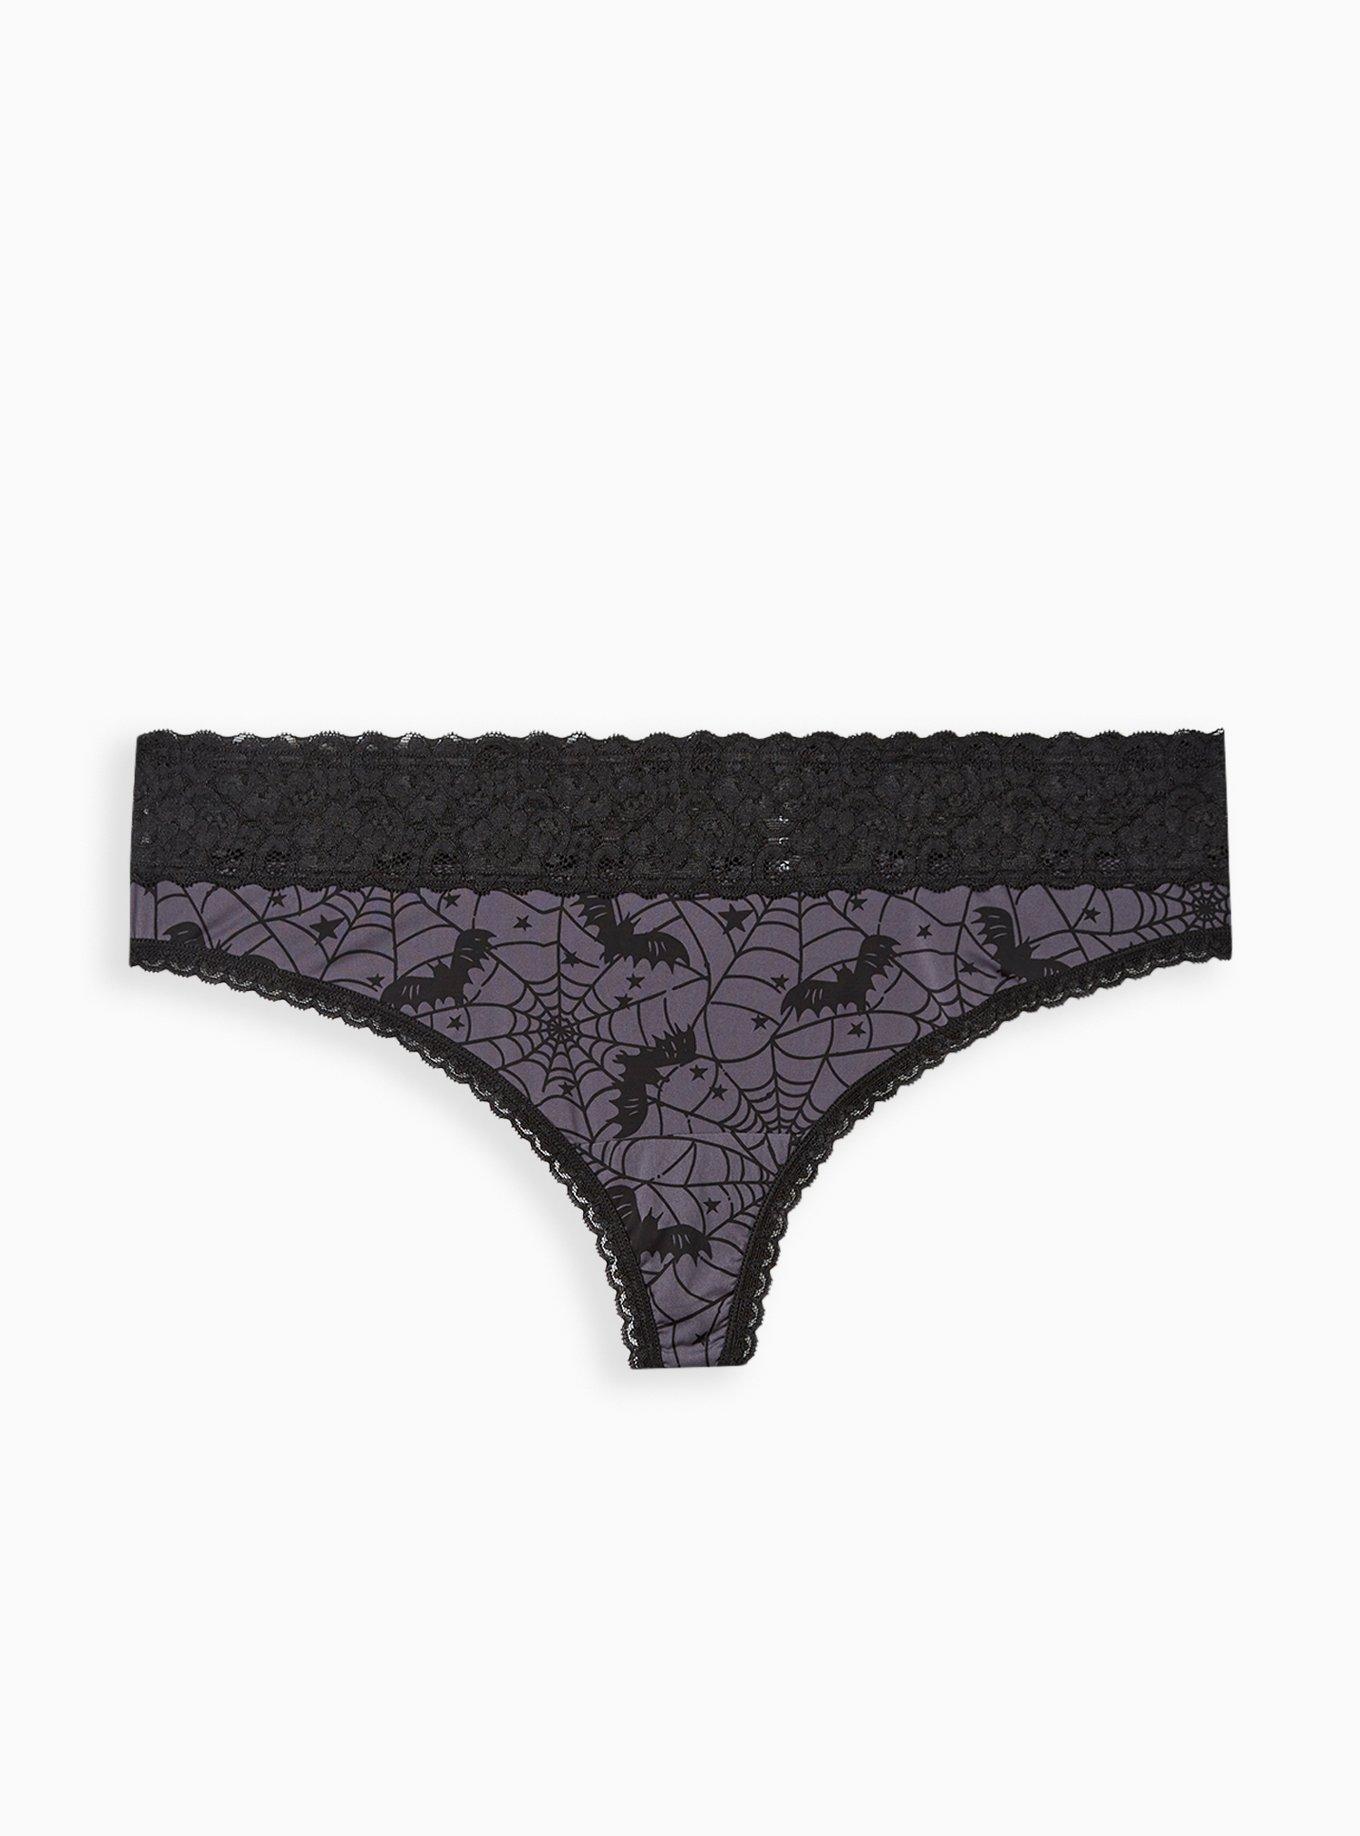 Flirty Touch lace Black panty for women sexy women girls ladies panty /briefs/hipster/bikini/thong